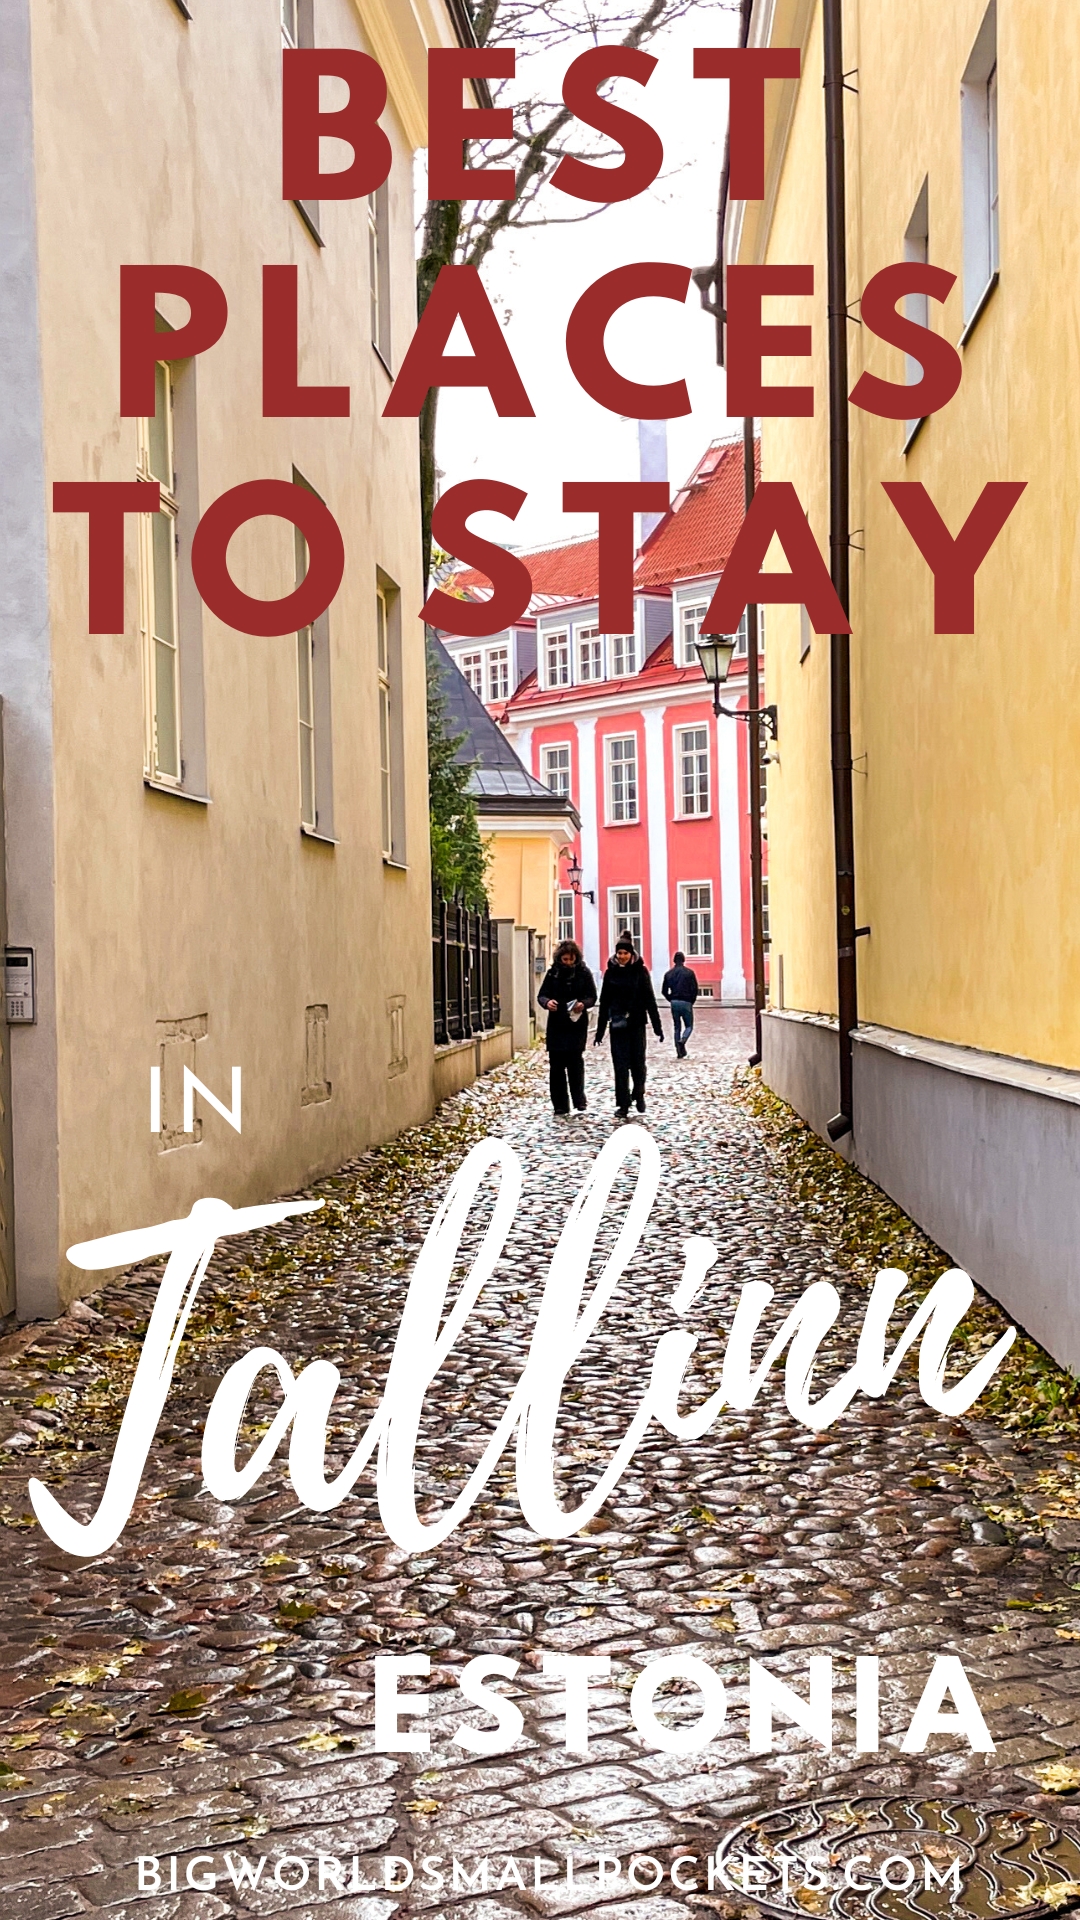 Best Places to Stay in Tallinn, Estonia